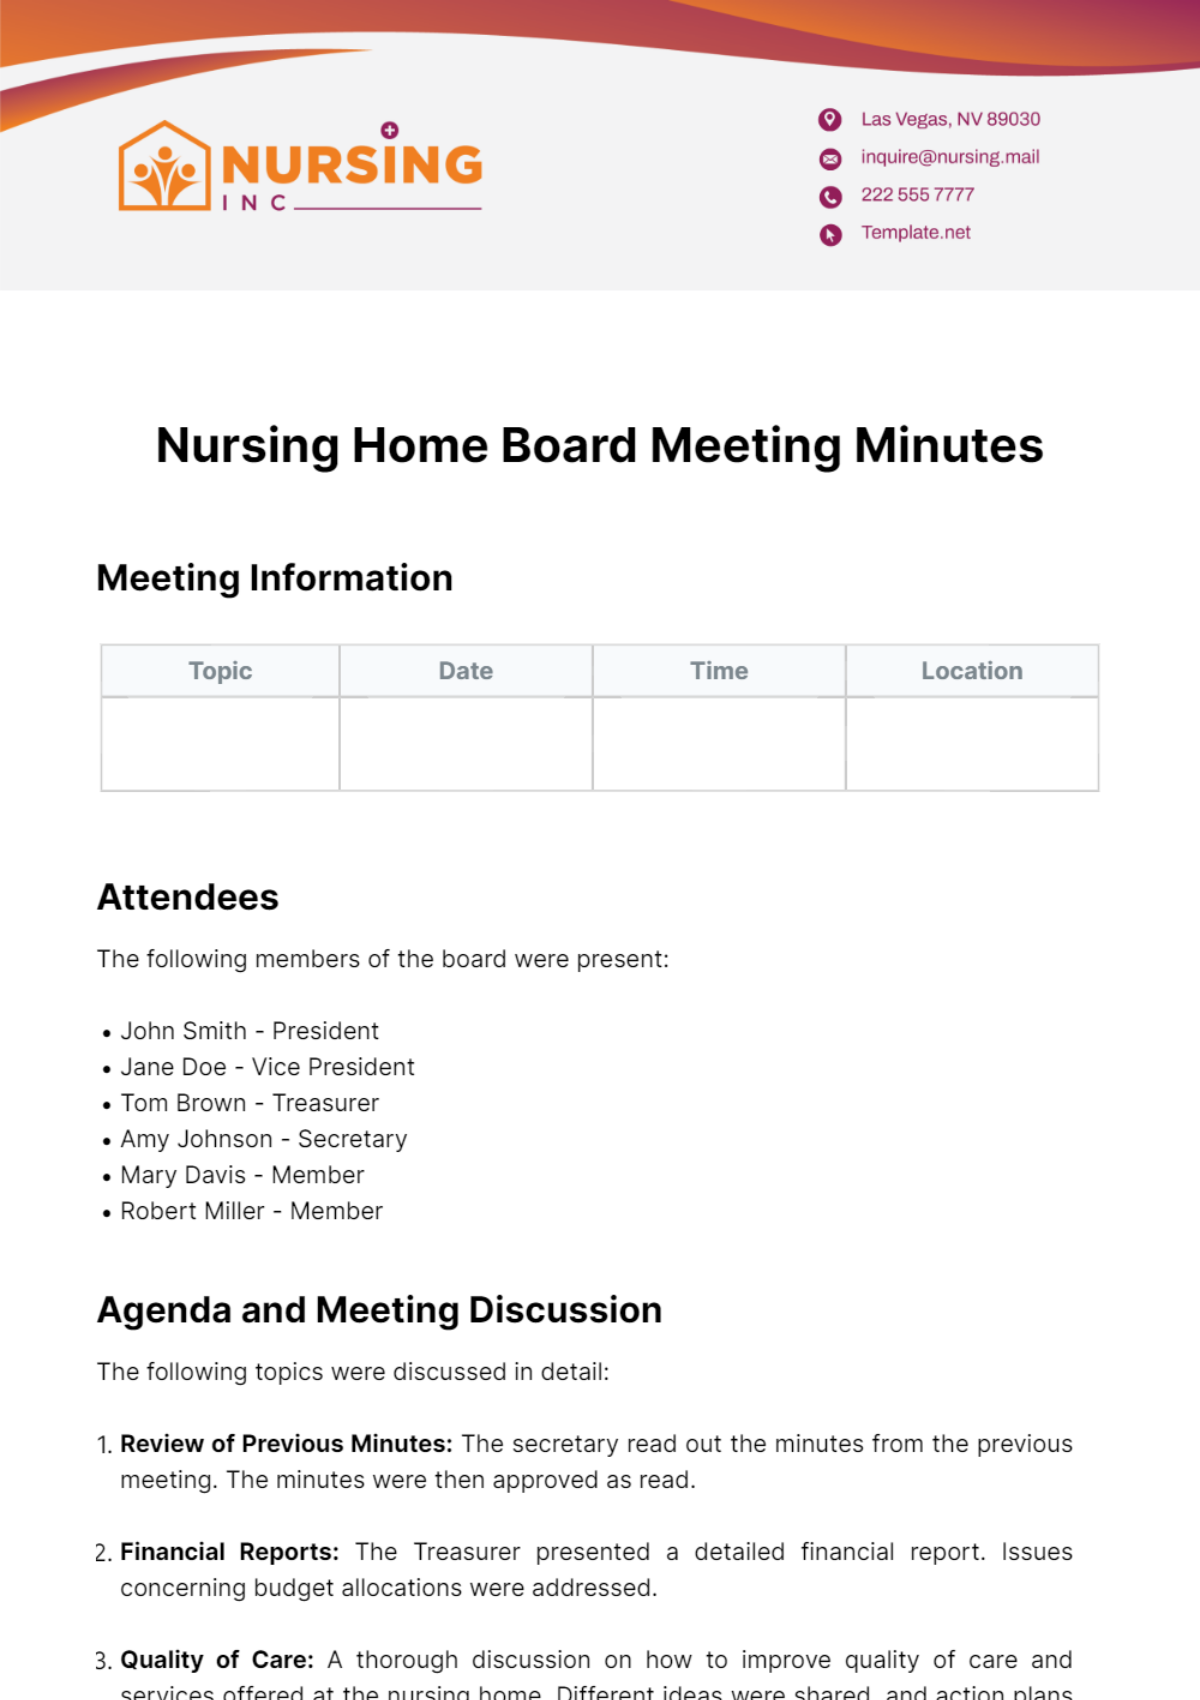 Nursing Home Board Meeting Minutes Template